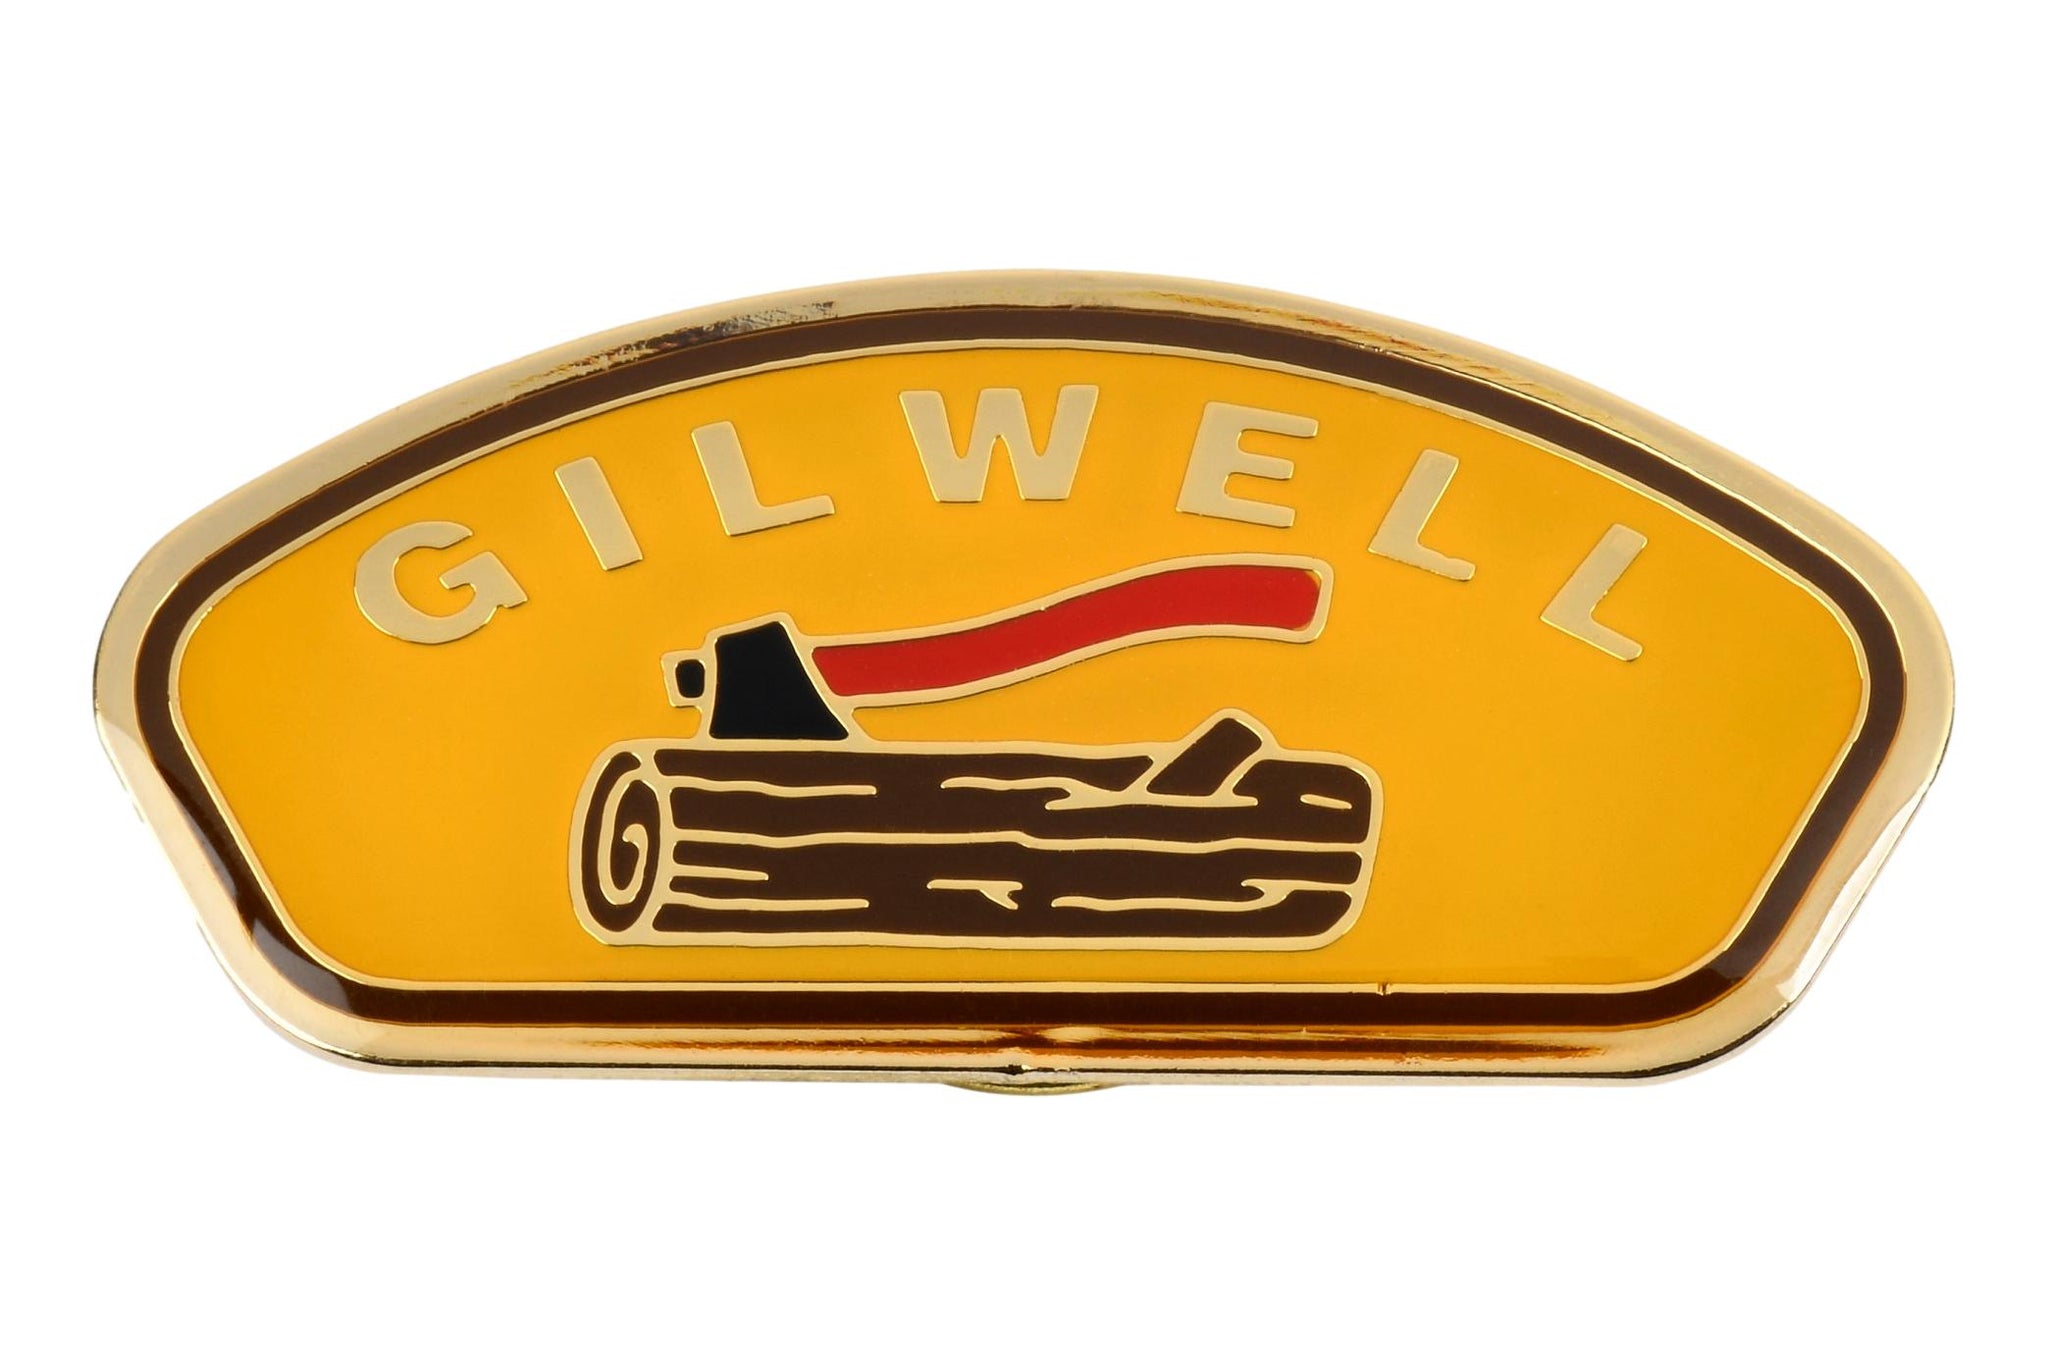 Gilwell CSP Pin